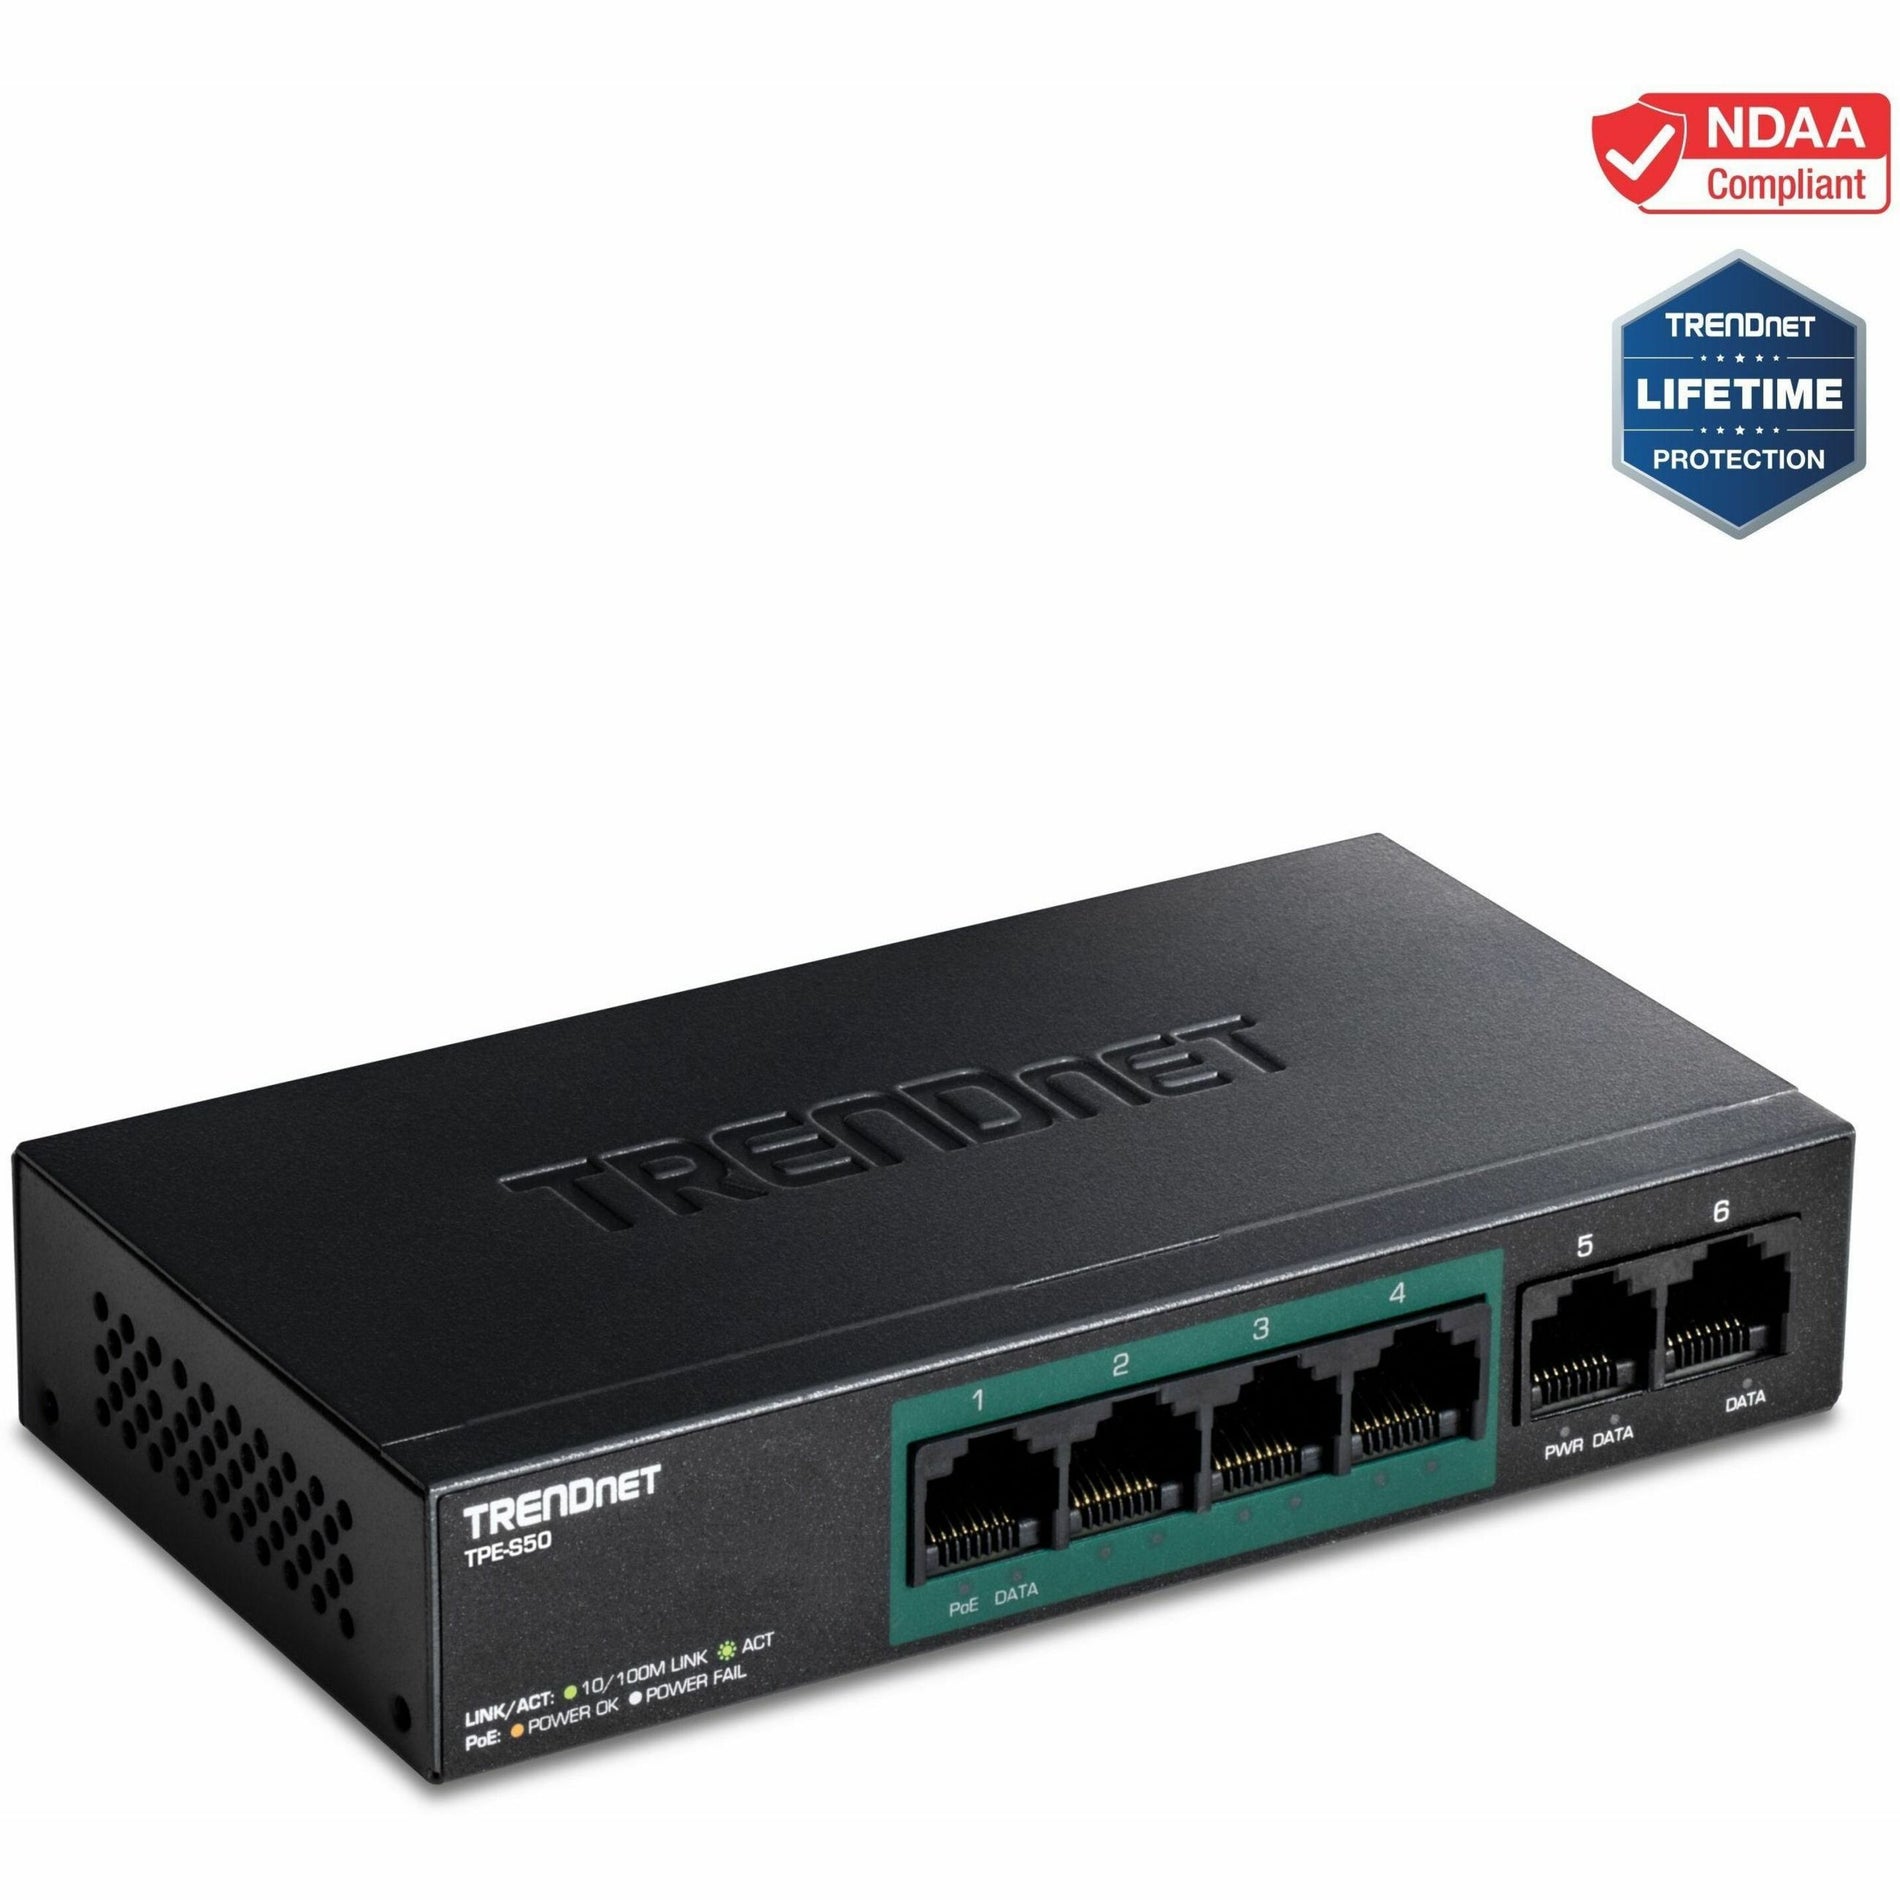 TRENDnet TPE-S50 6-Port Fast Ethernet PoE+ Switch, 60W PoE Budget, Metal, Lifetime Protection